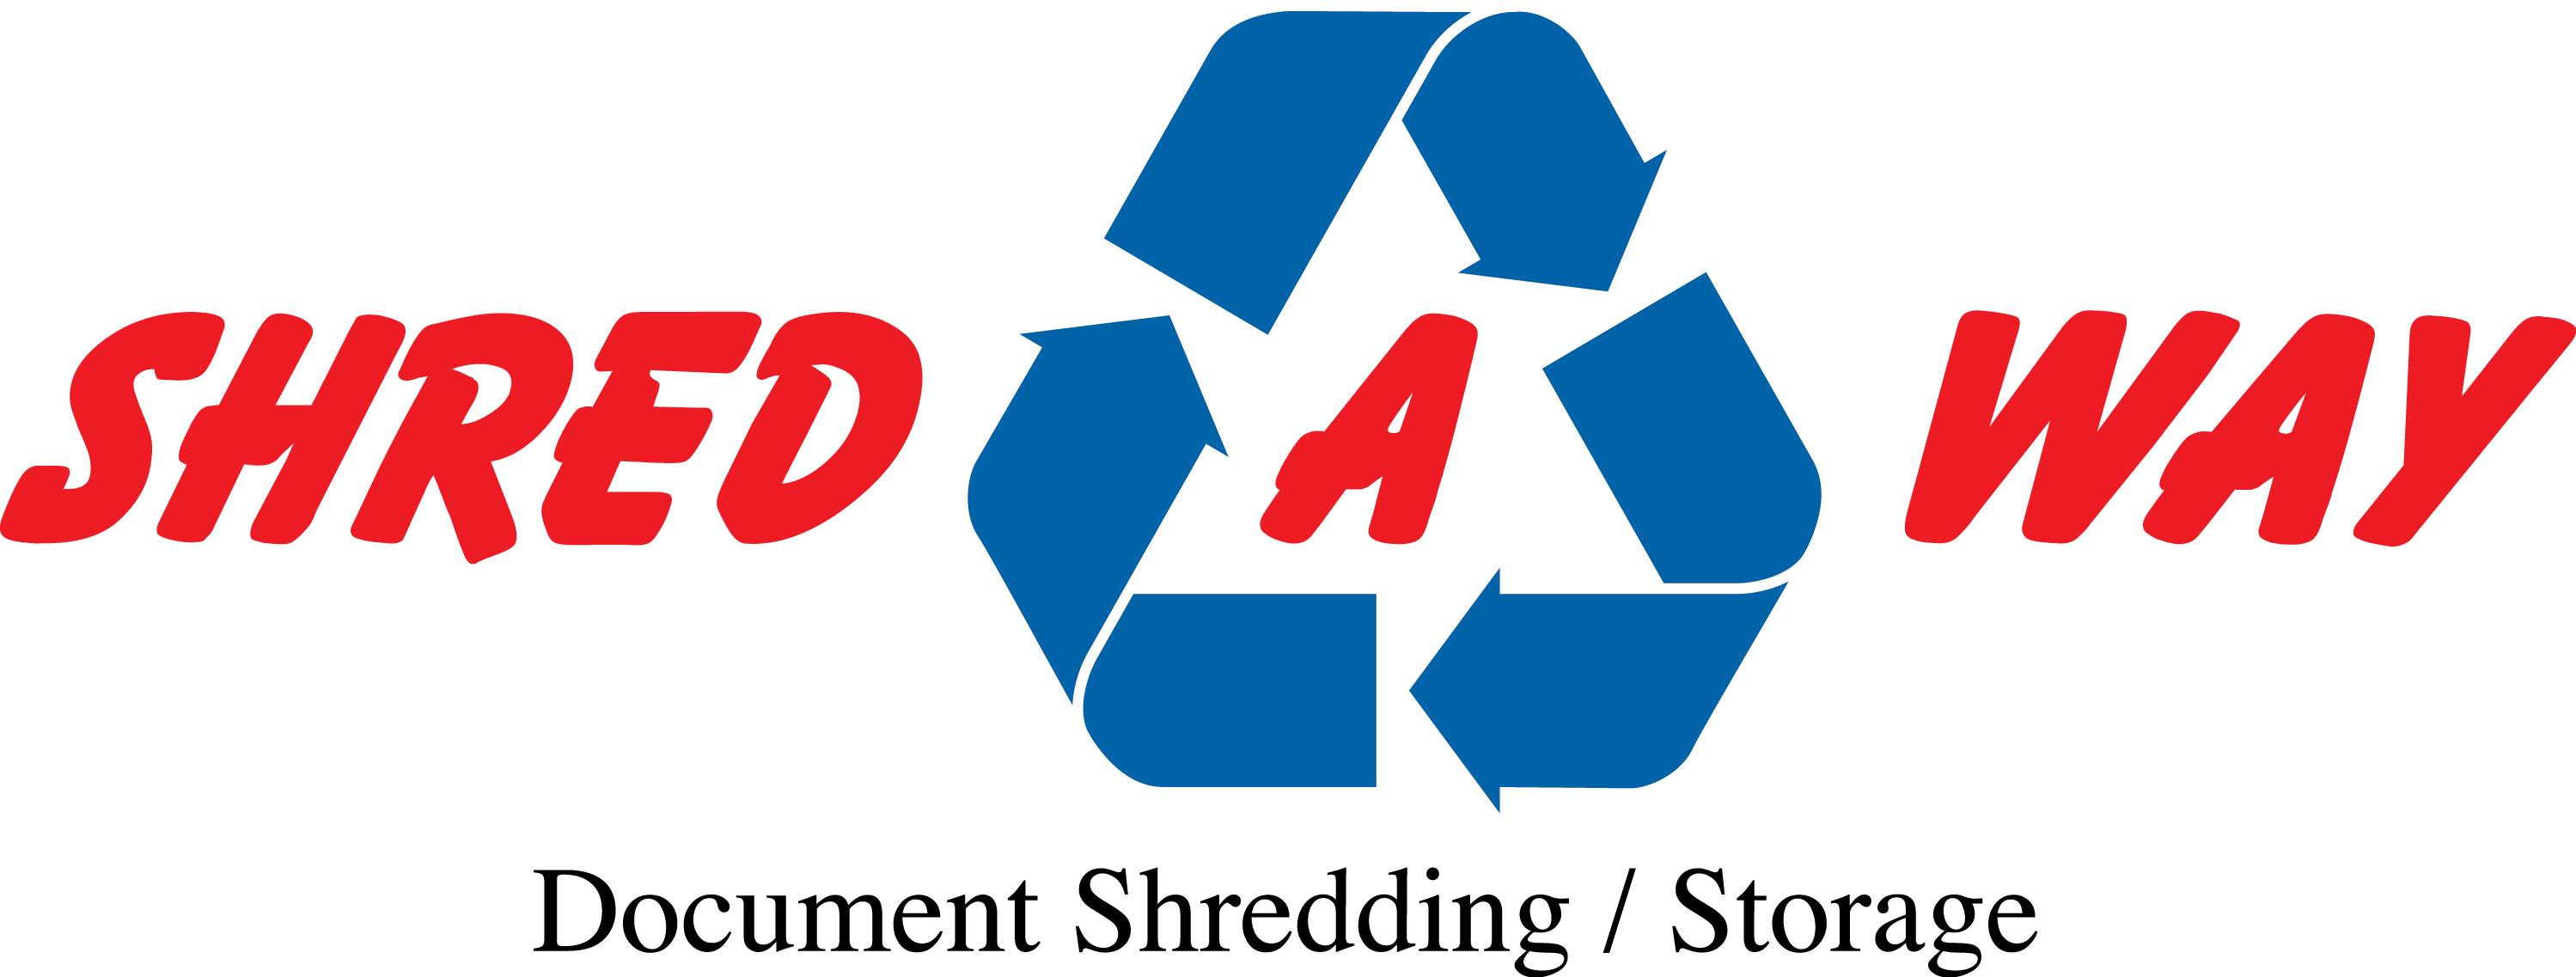 Shred A Way logo